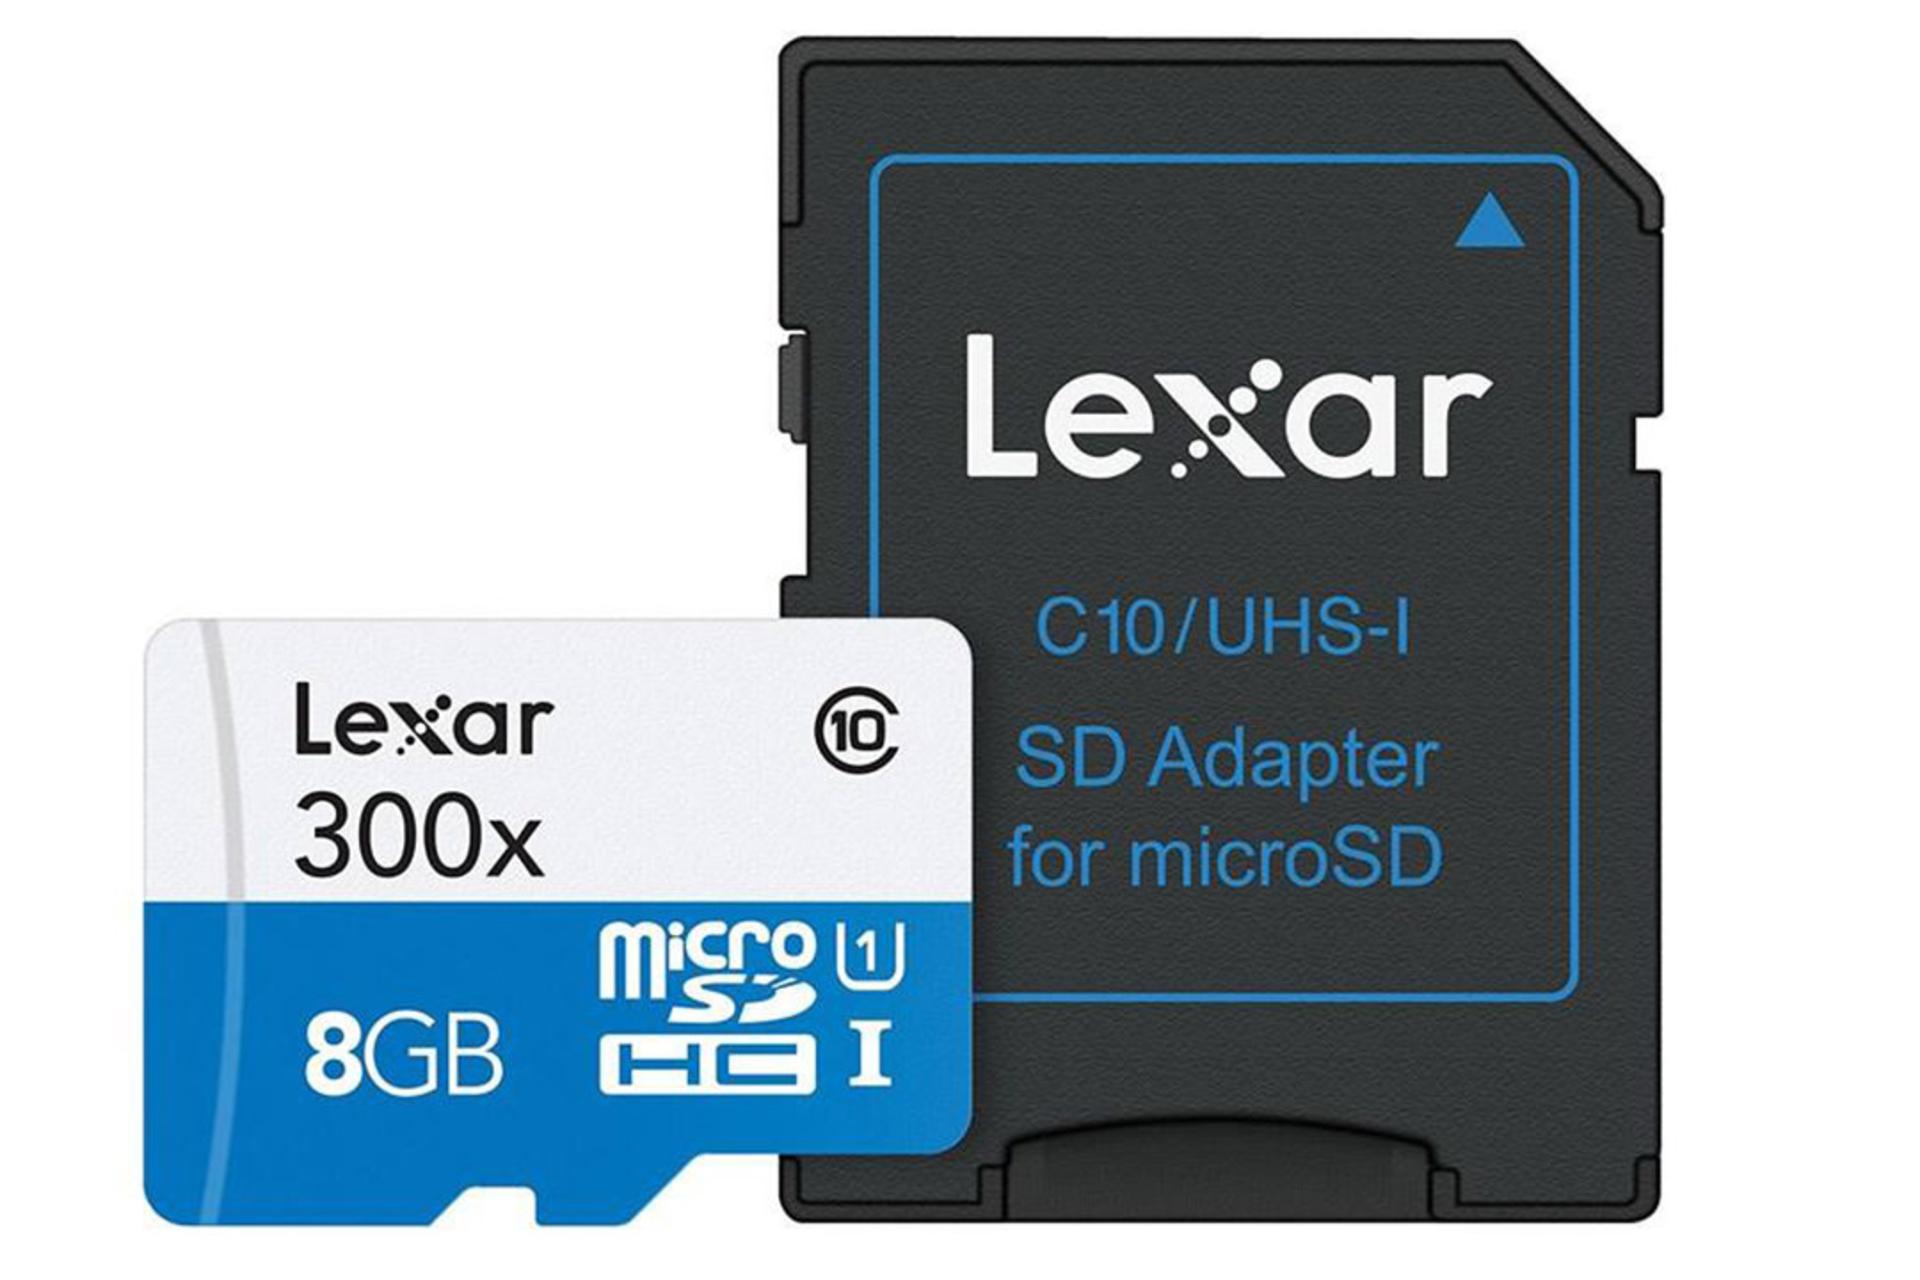 Lexar High Performance microSDHC Class 10 UHS-I U1 8GB